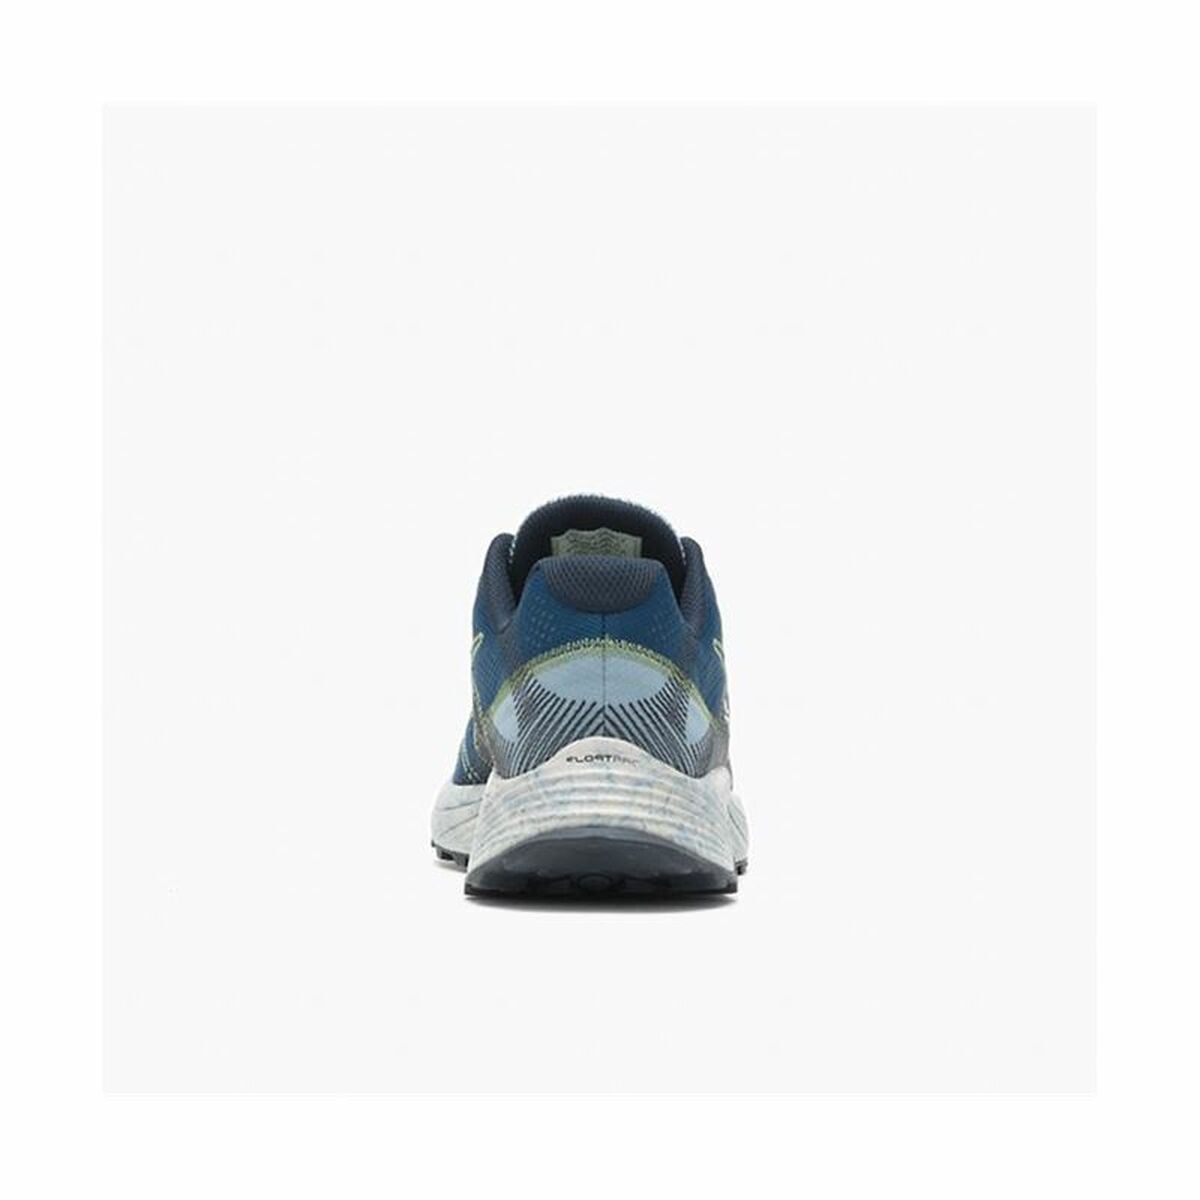 Chaussures de Sport pour Homme Merrell Moab Flight Bleu